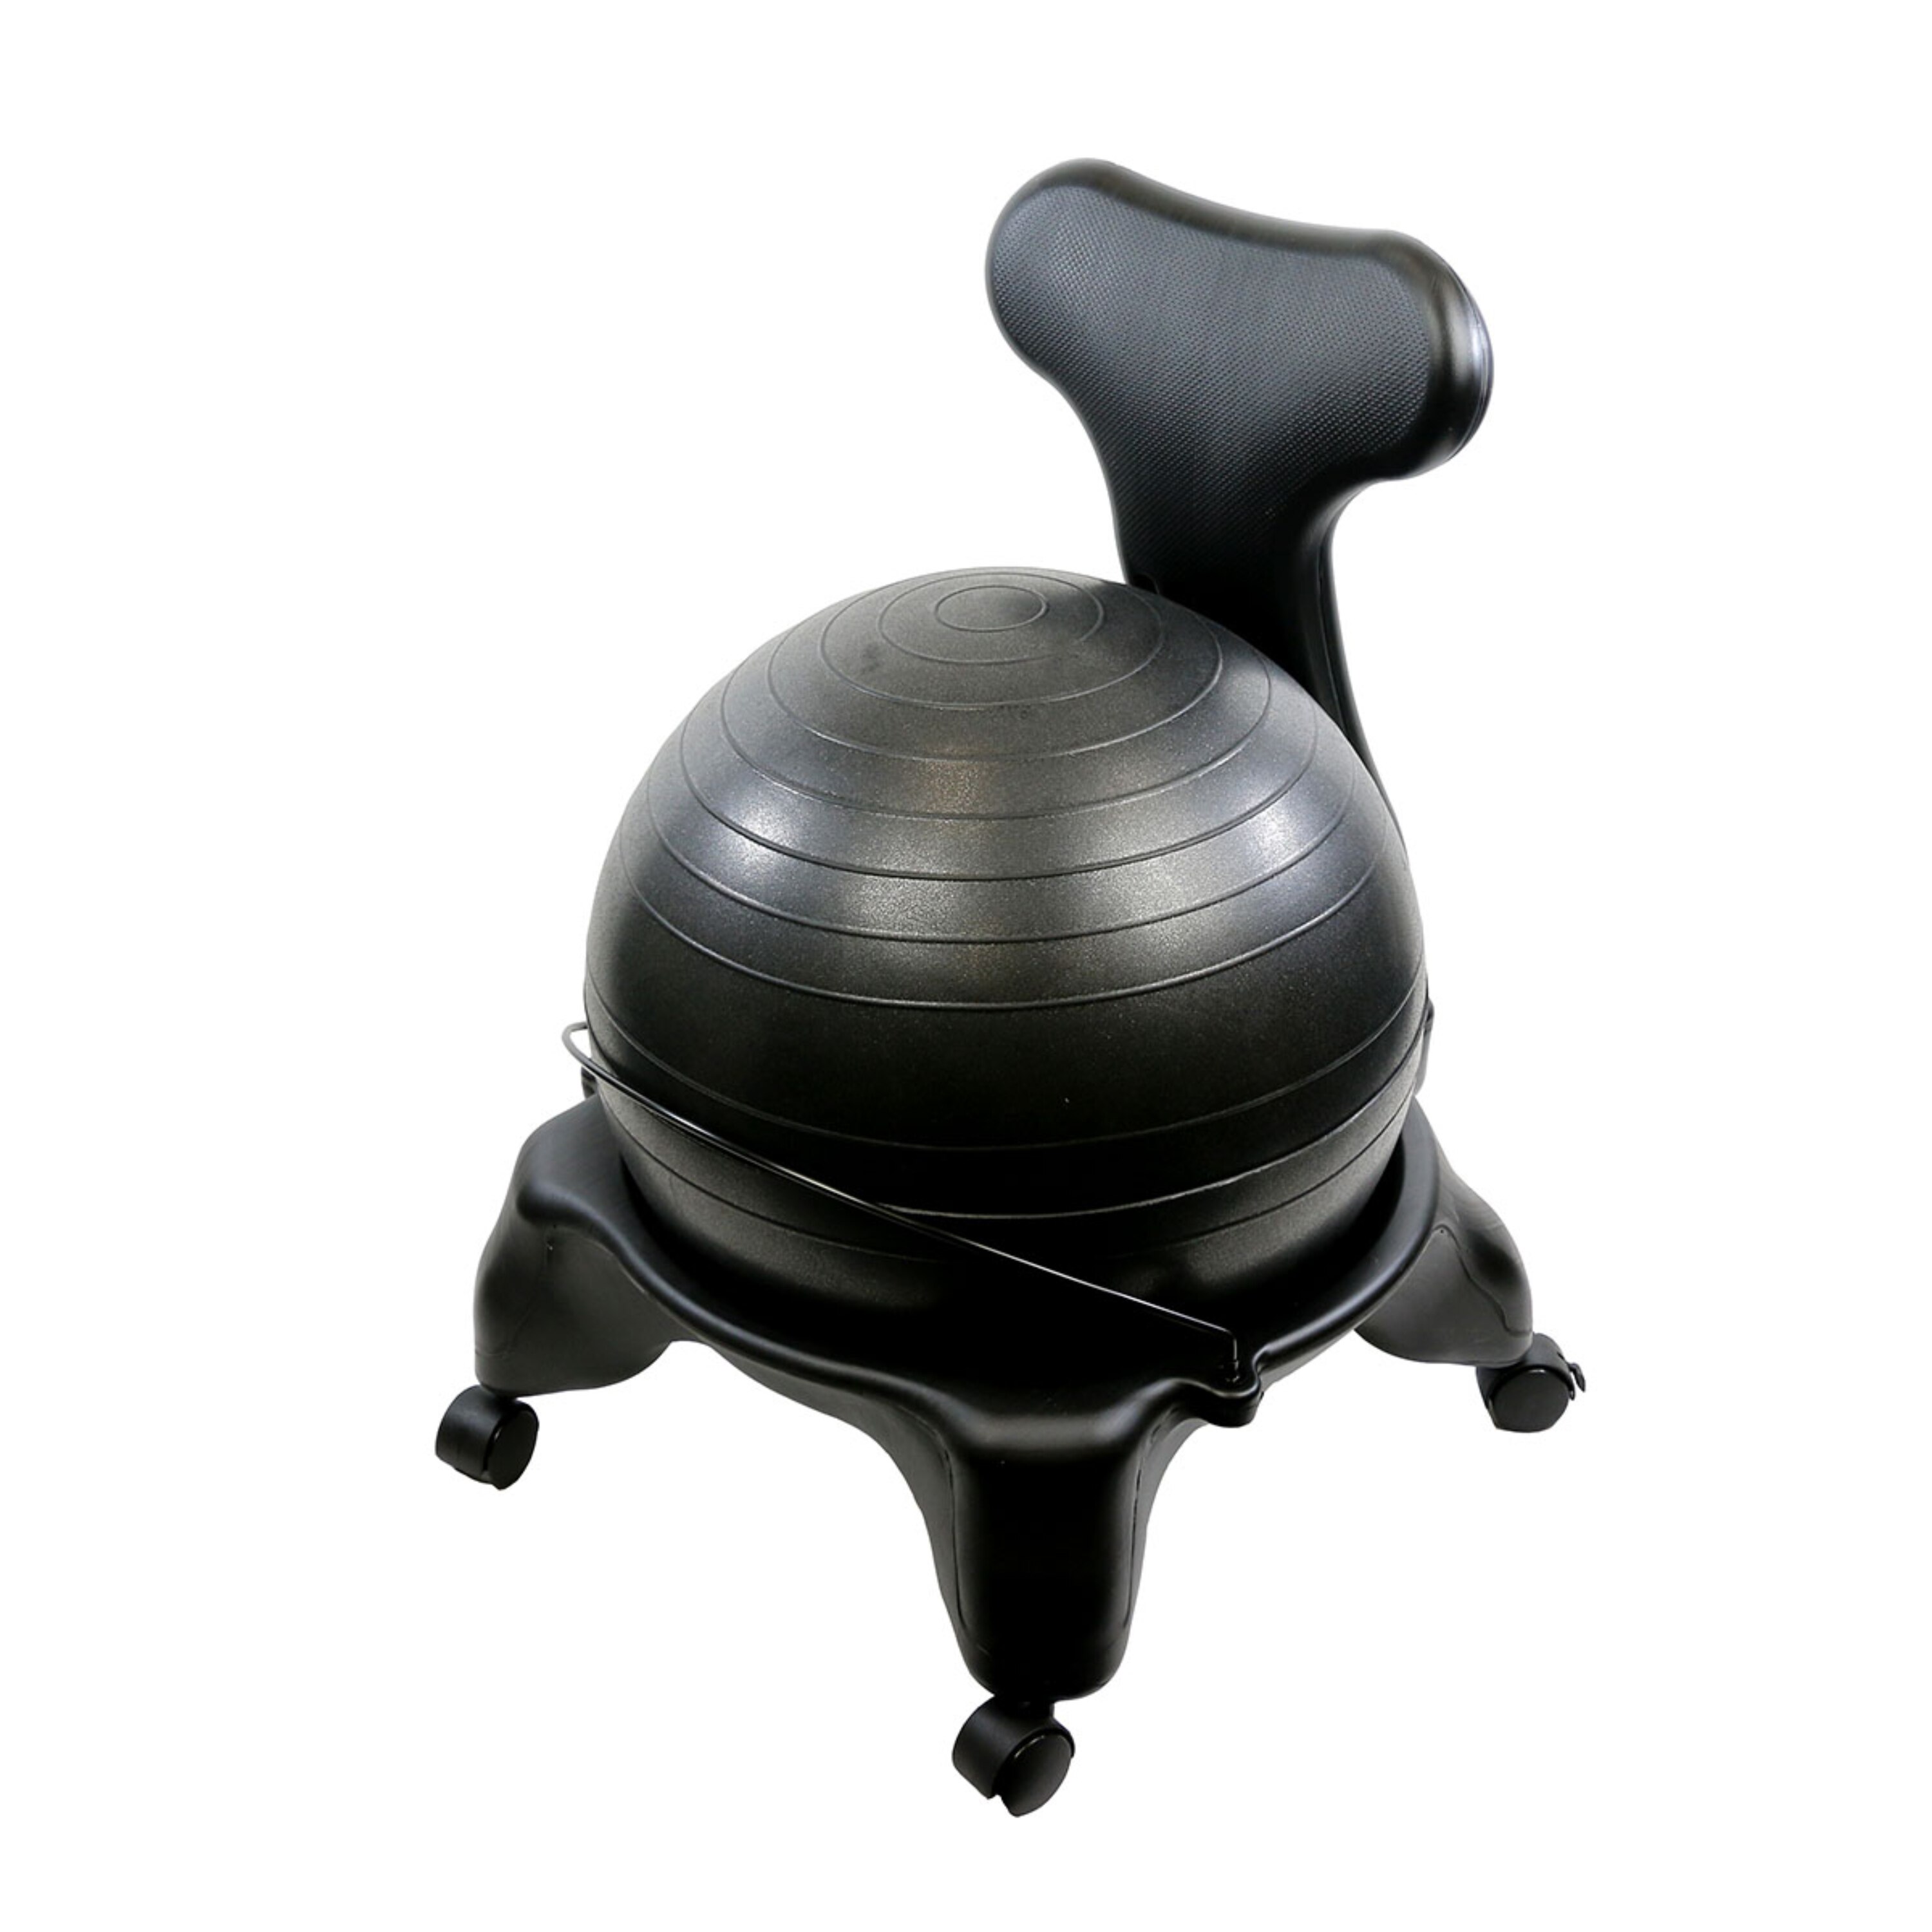 CanDo Plastic Ball Chair, Adult, 22"", Black